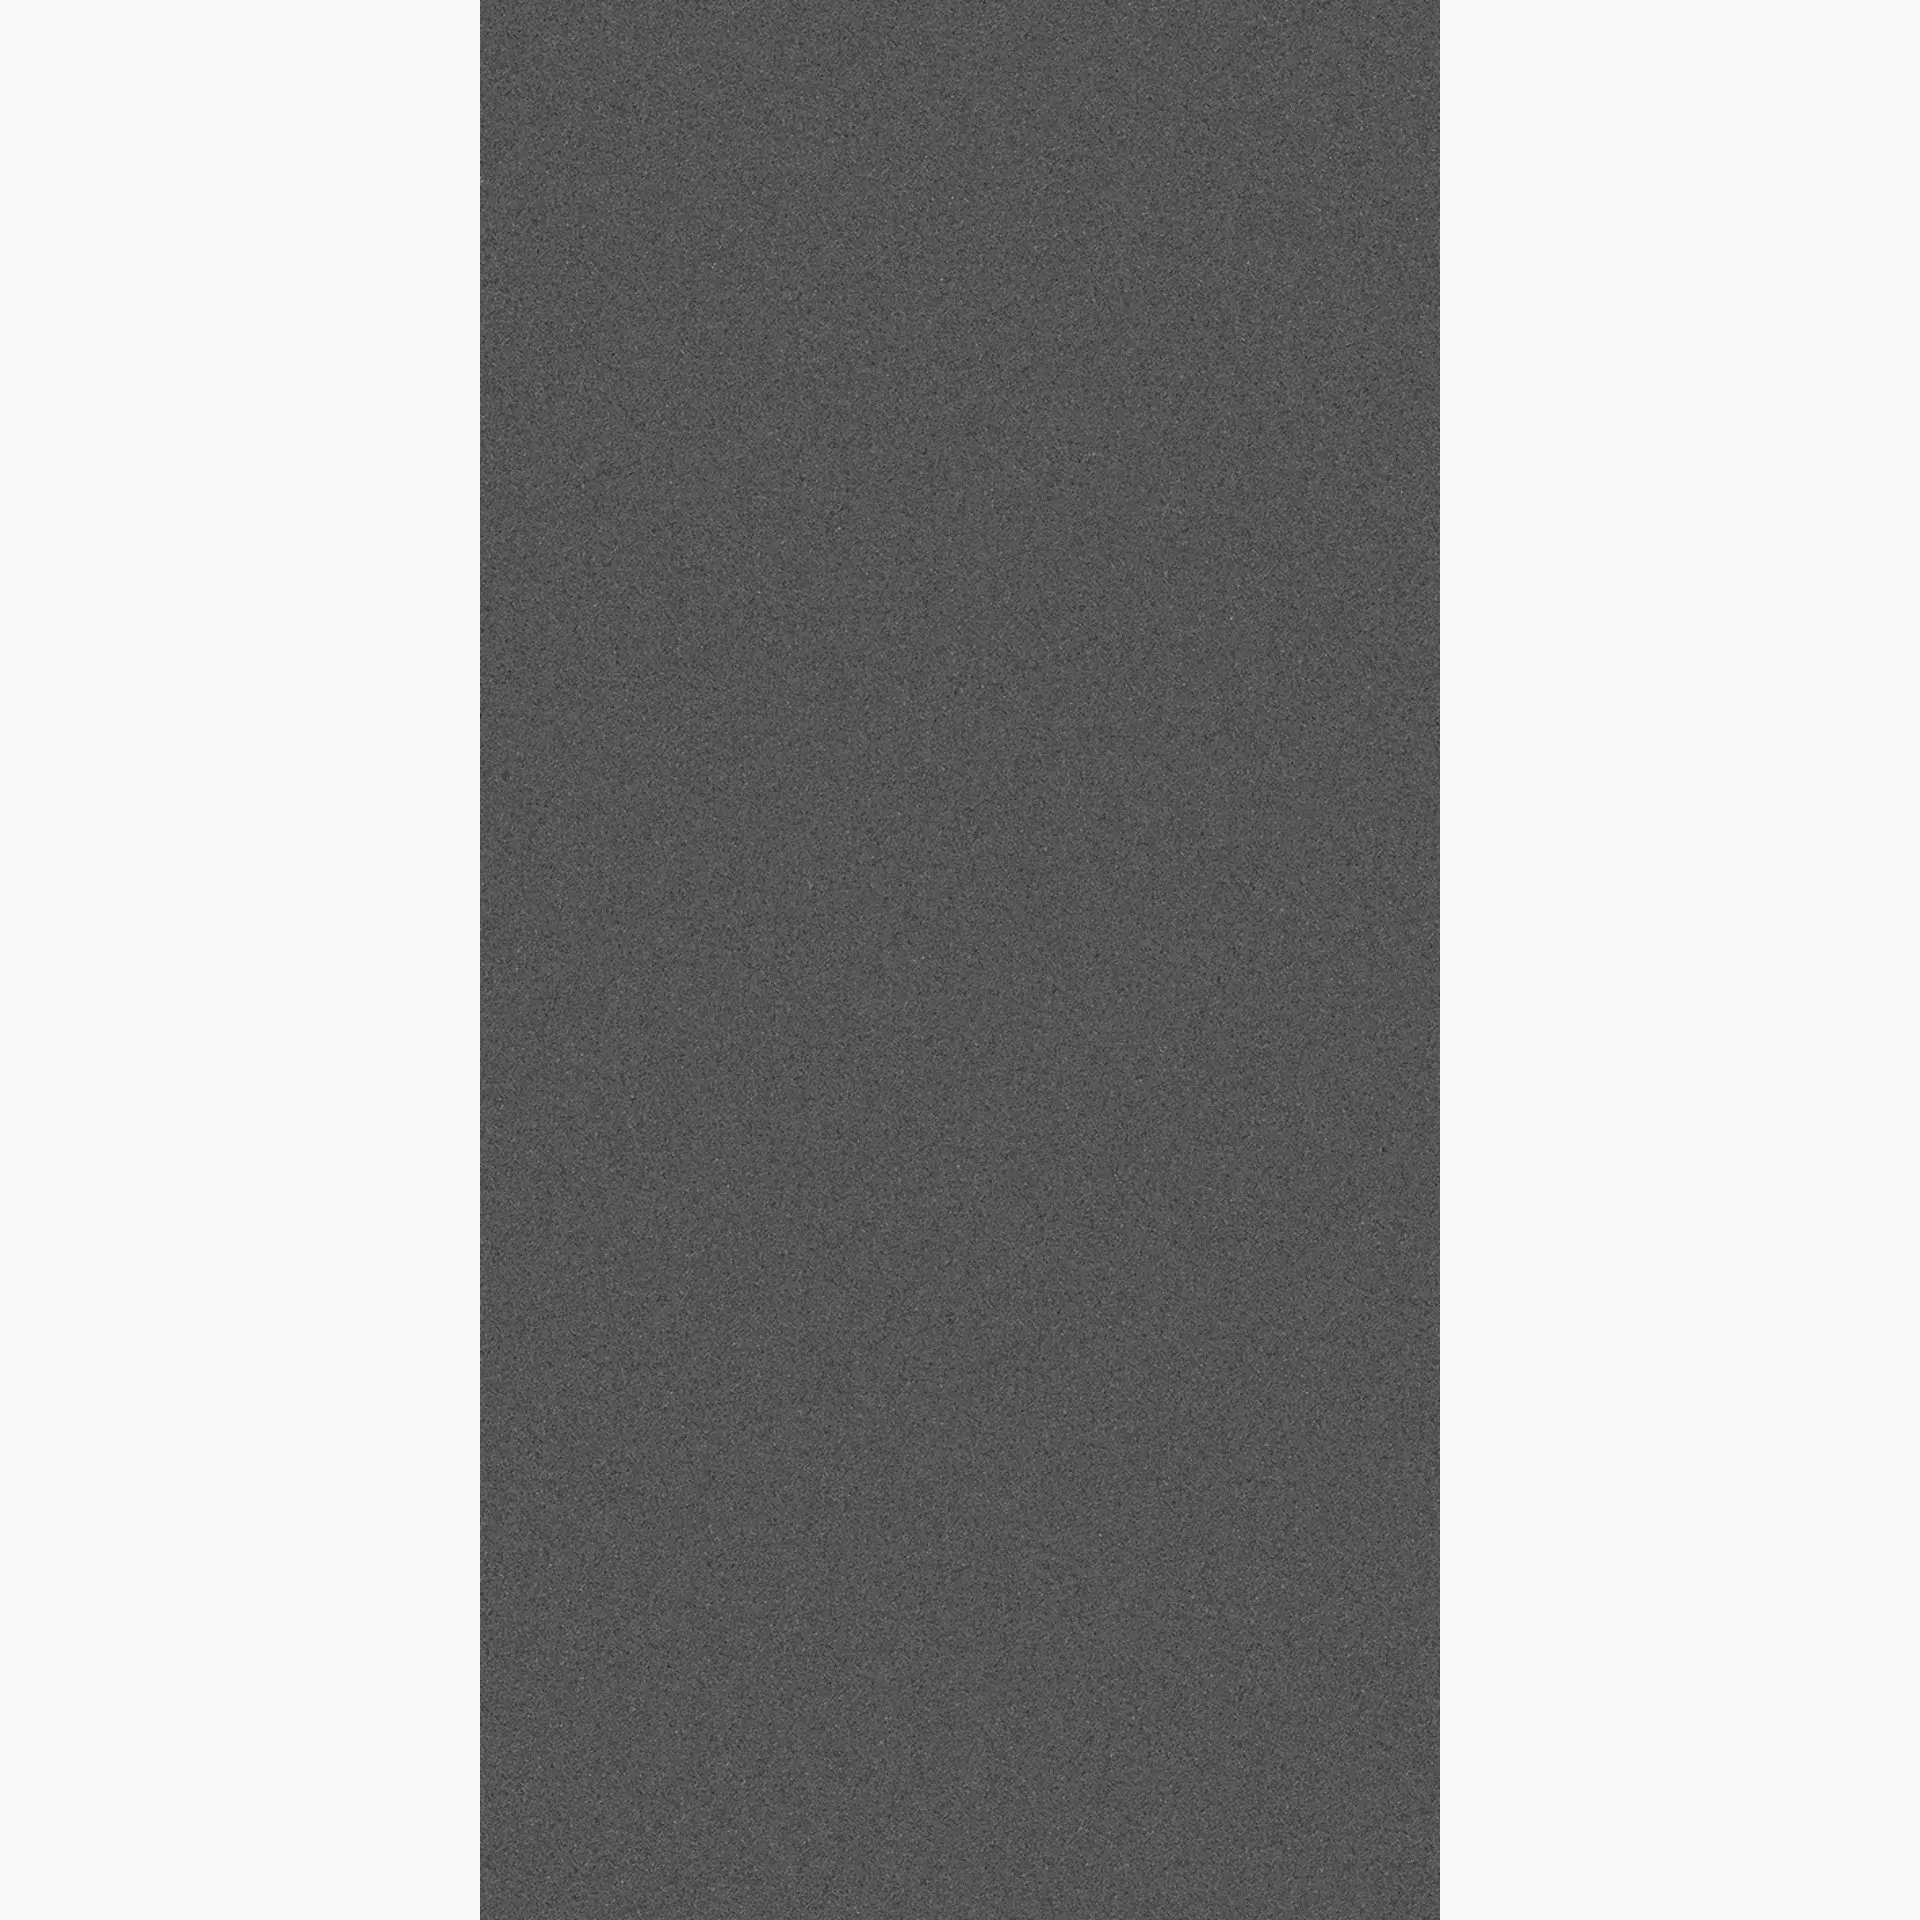 Villeroy & Boch Pure Line 2.0 Asphalt Grey Matt 2751-UL90 60x120cm rectified 12mm